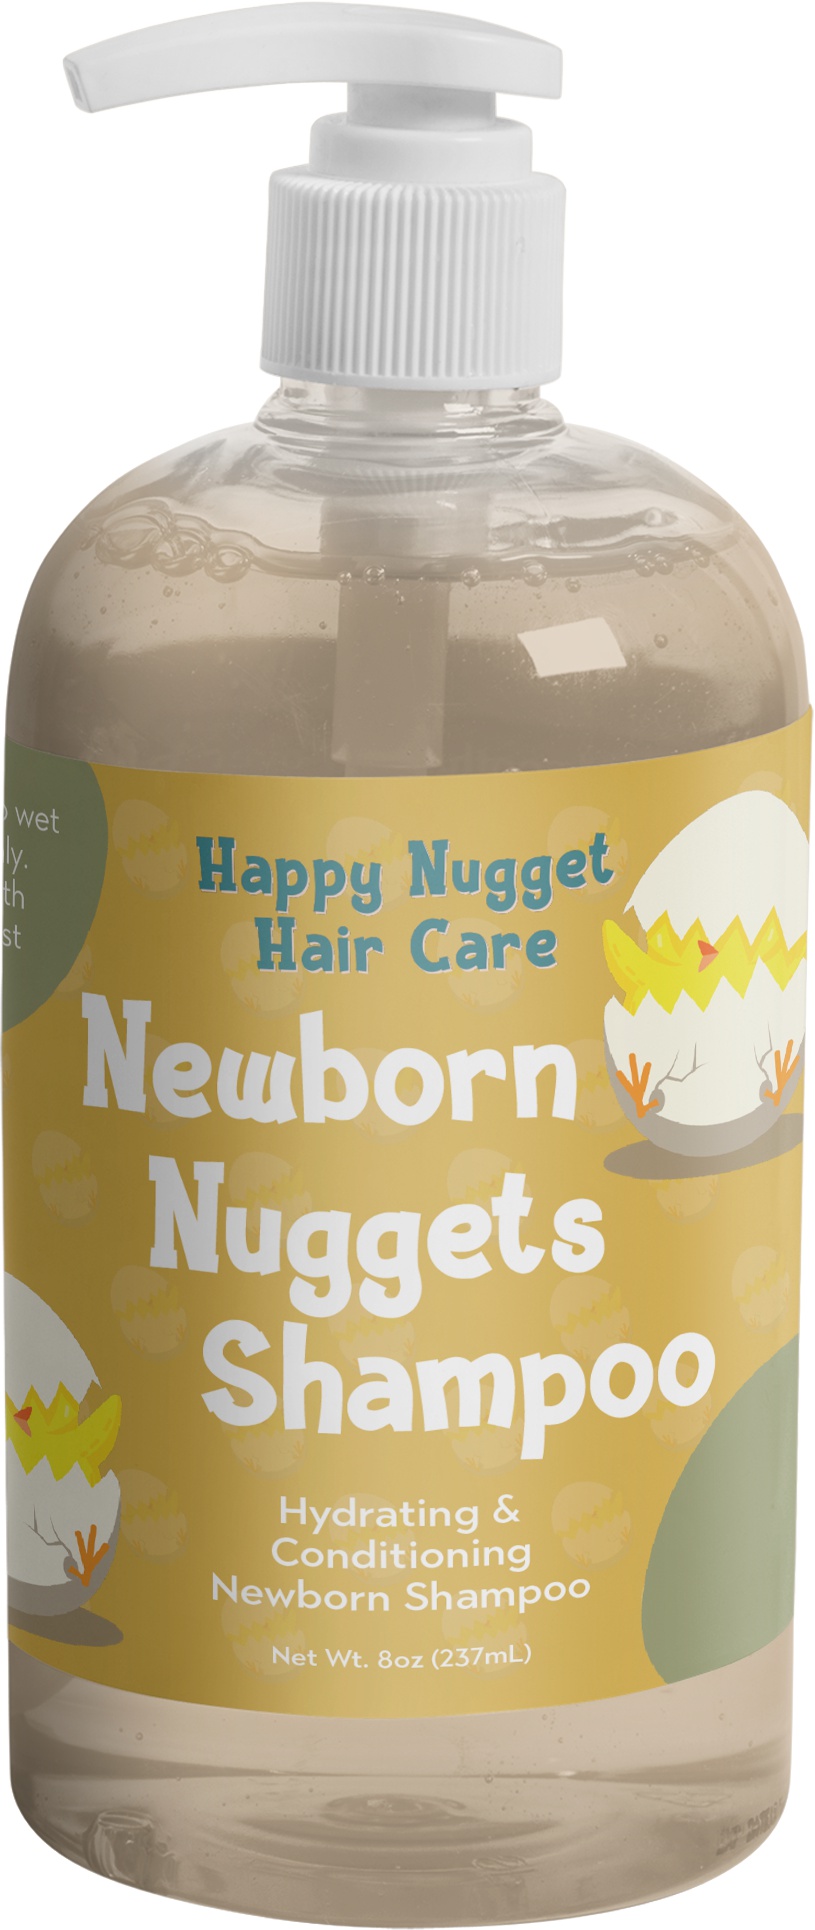 Happy Nugget Hair Care Newborn Nugget Shampoo